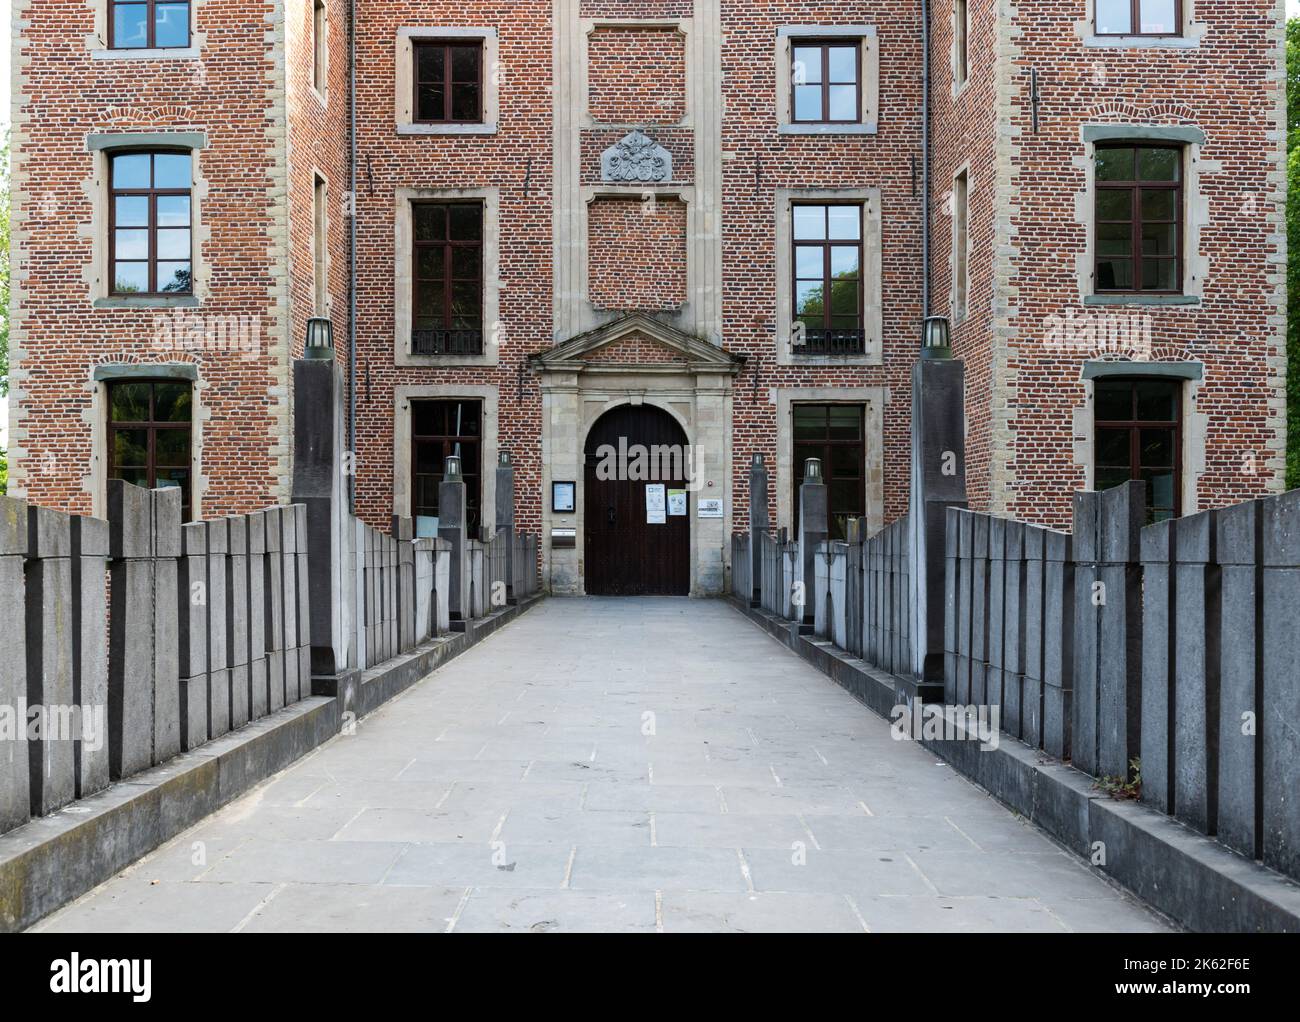 Sint-Pieters-Leeuw, Flämische Brabant Region - Belgien - 07 20 2021 der Eingang zum Schloss Coloma Stockfoto